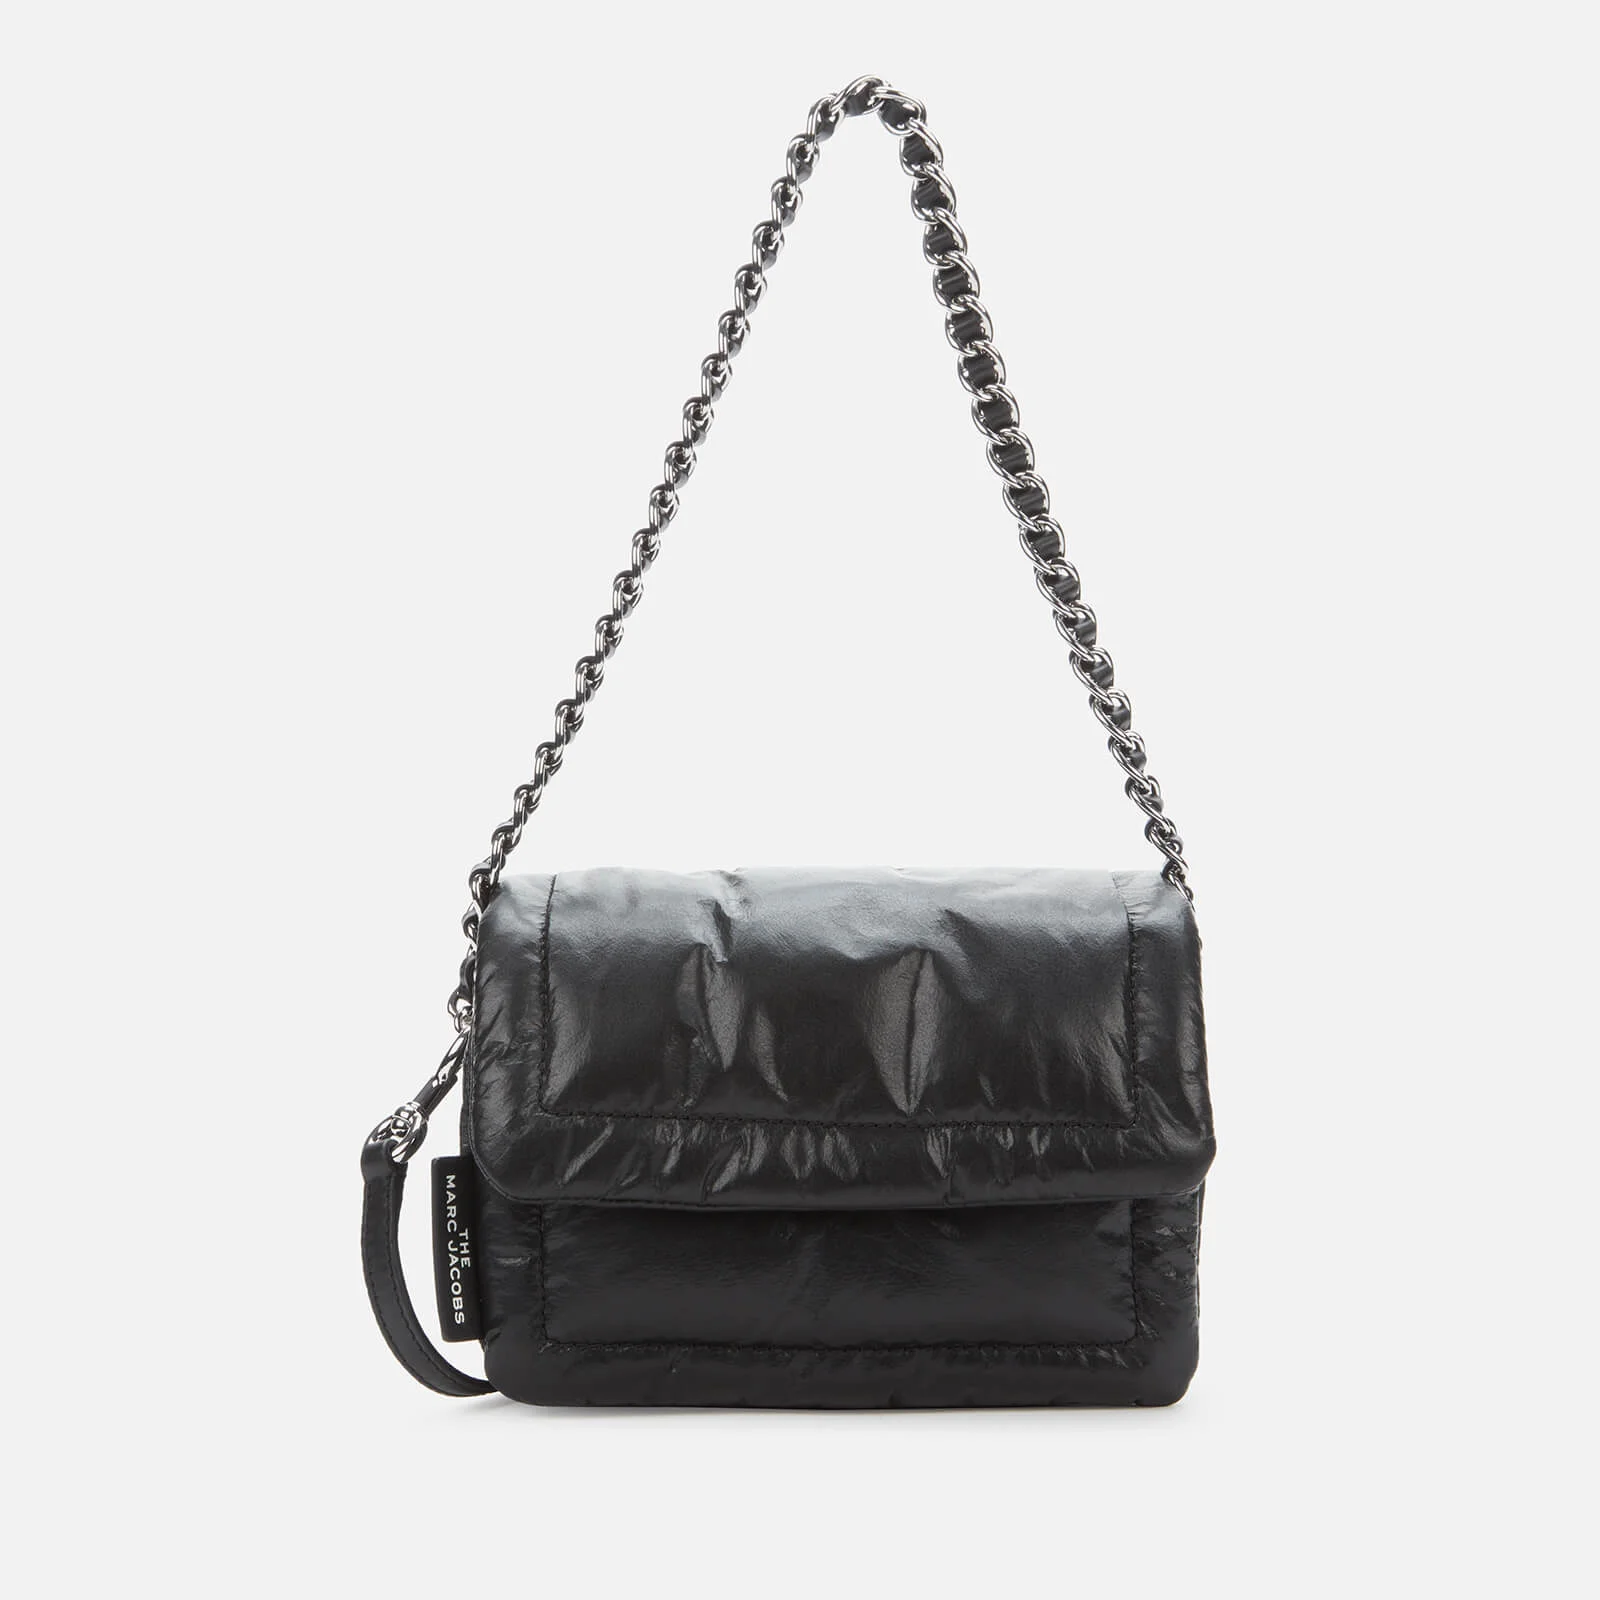 Marc Jacobs Women's The Mini Pillow Bag - Black Image 1